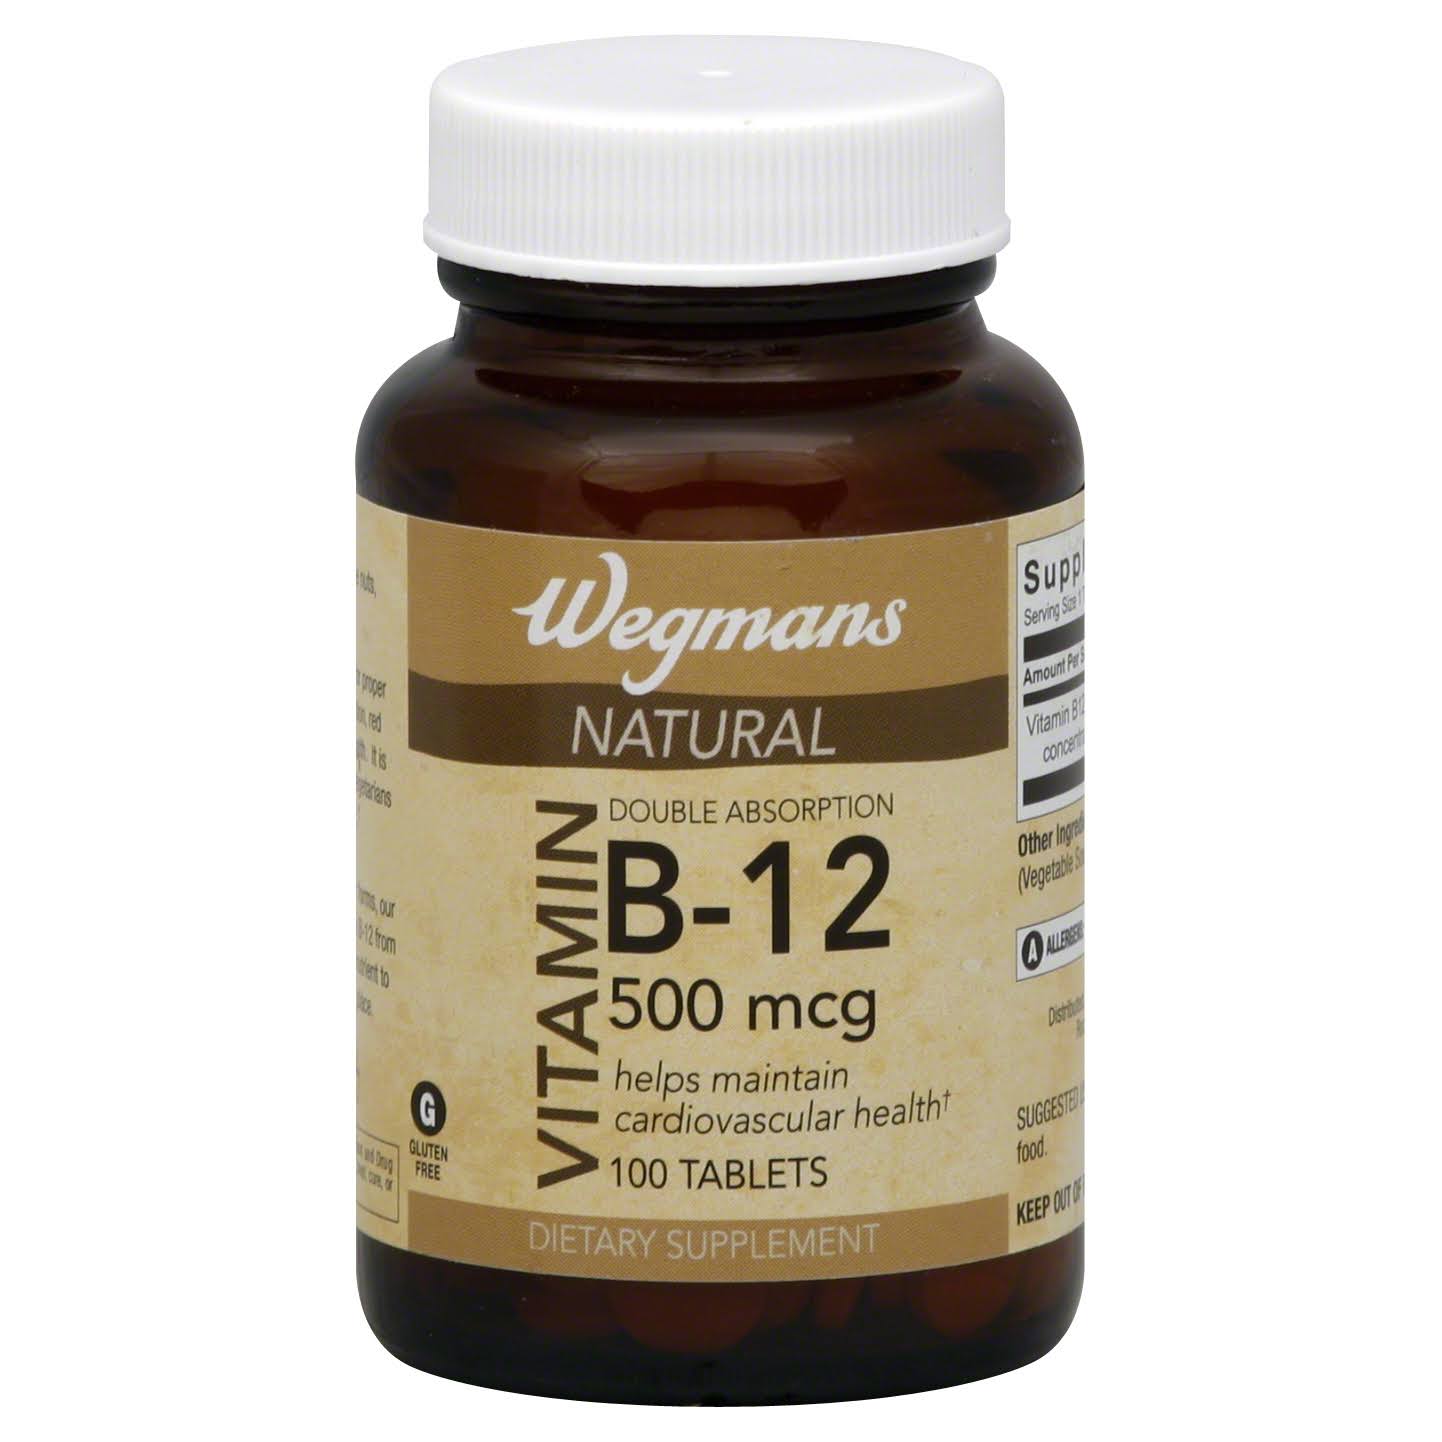 Lindberg Wegmans Vitamin B-12 Natural Double Absorption Dietary Supplement - 500mcg,100ct